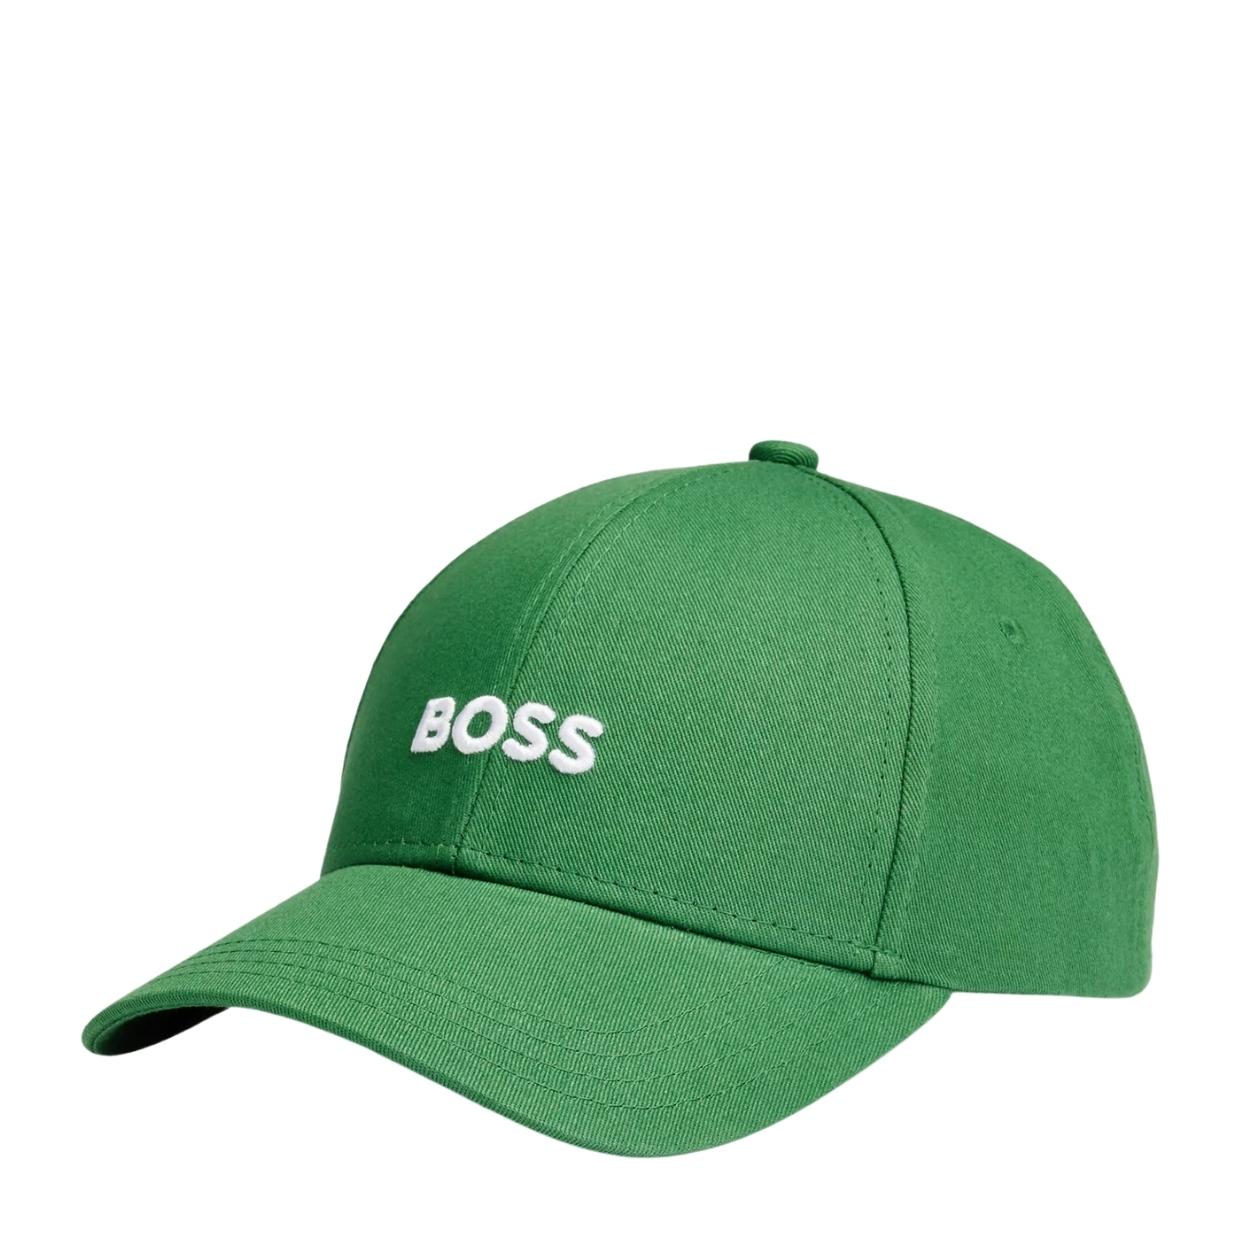 – BOSS Green Embroidered Wear Zed Logo Designer Cap Retro